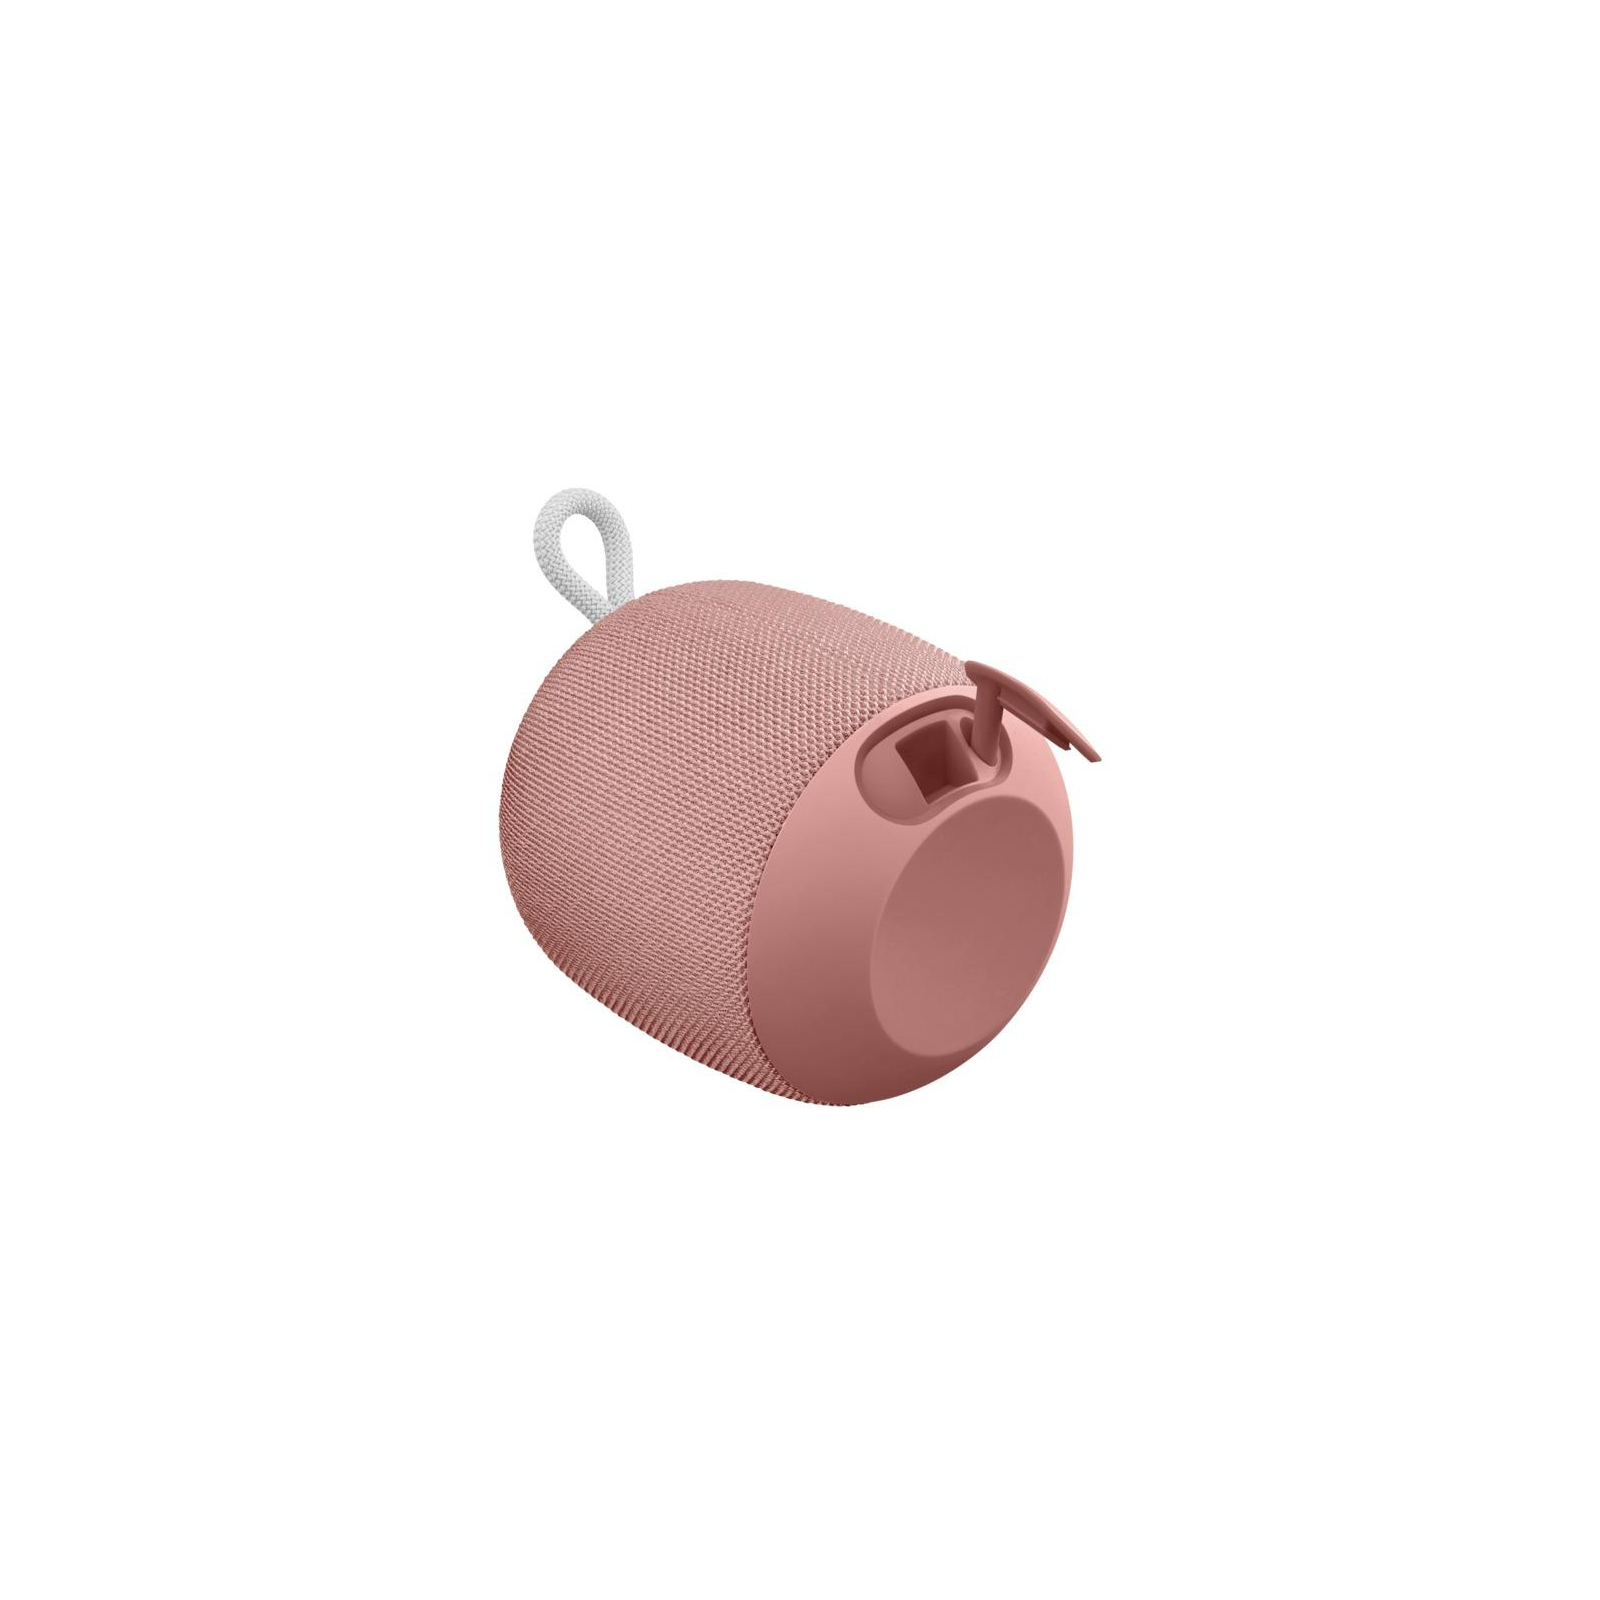 Акустична система Ultimate Ears Wonderboom Cashmere Pink (984-000854) зображення 6